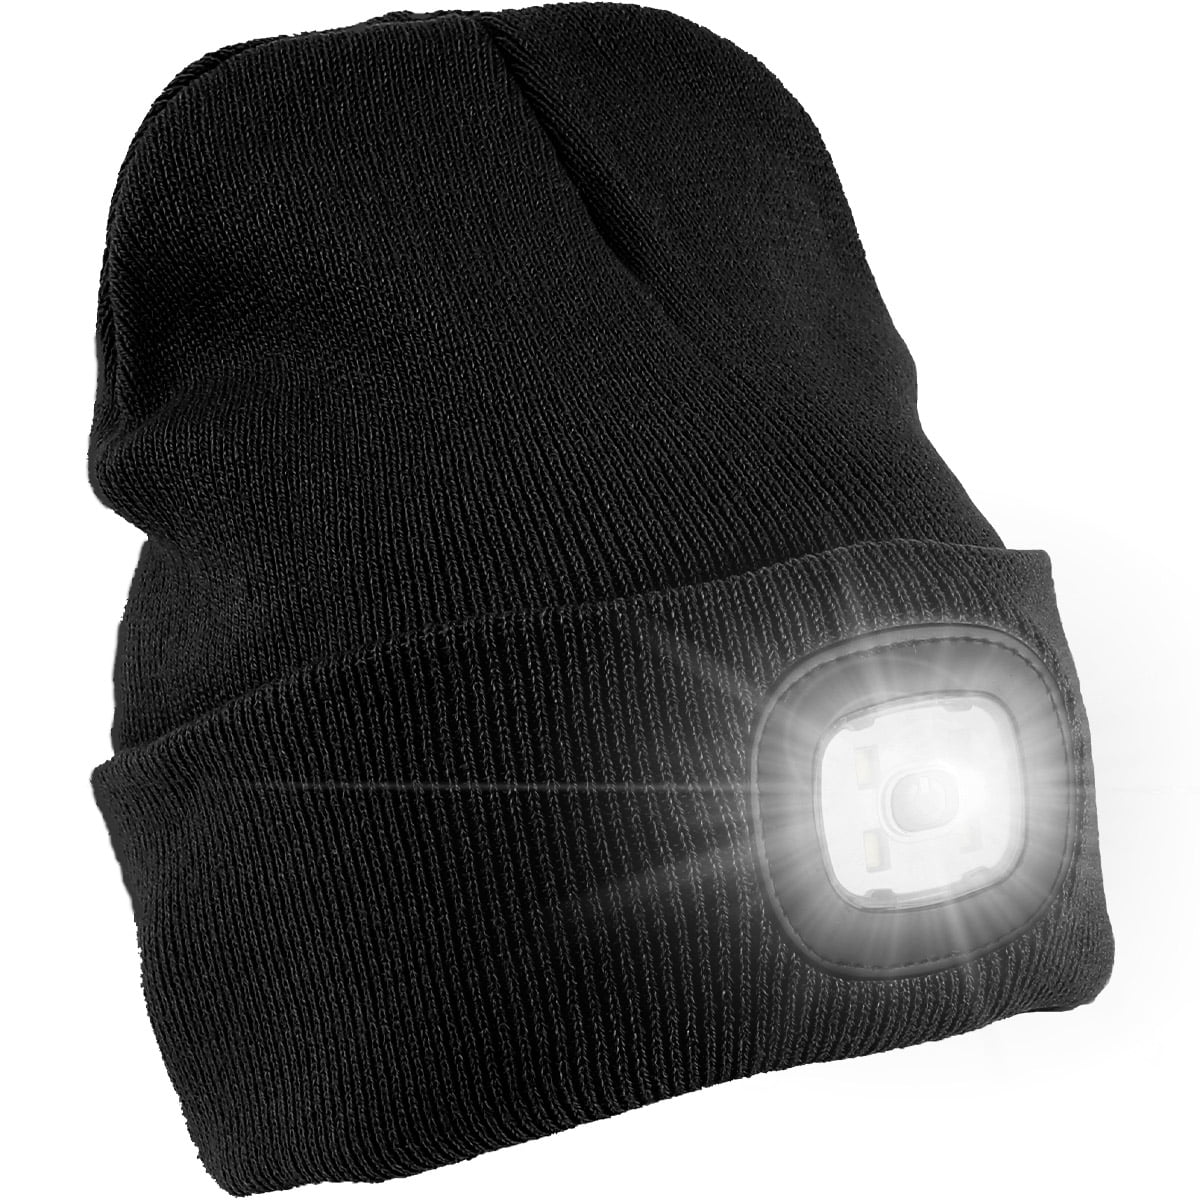 Eummy LED Beanie Hat Detachable LED Lighted Beanie Cap Adjustable  Brightness Lighting Headlight Hat Winter Warm Washable Headlamp Cap Unisex  Knitted Beanie with LED Light Gifts for Birthdays Chris